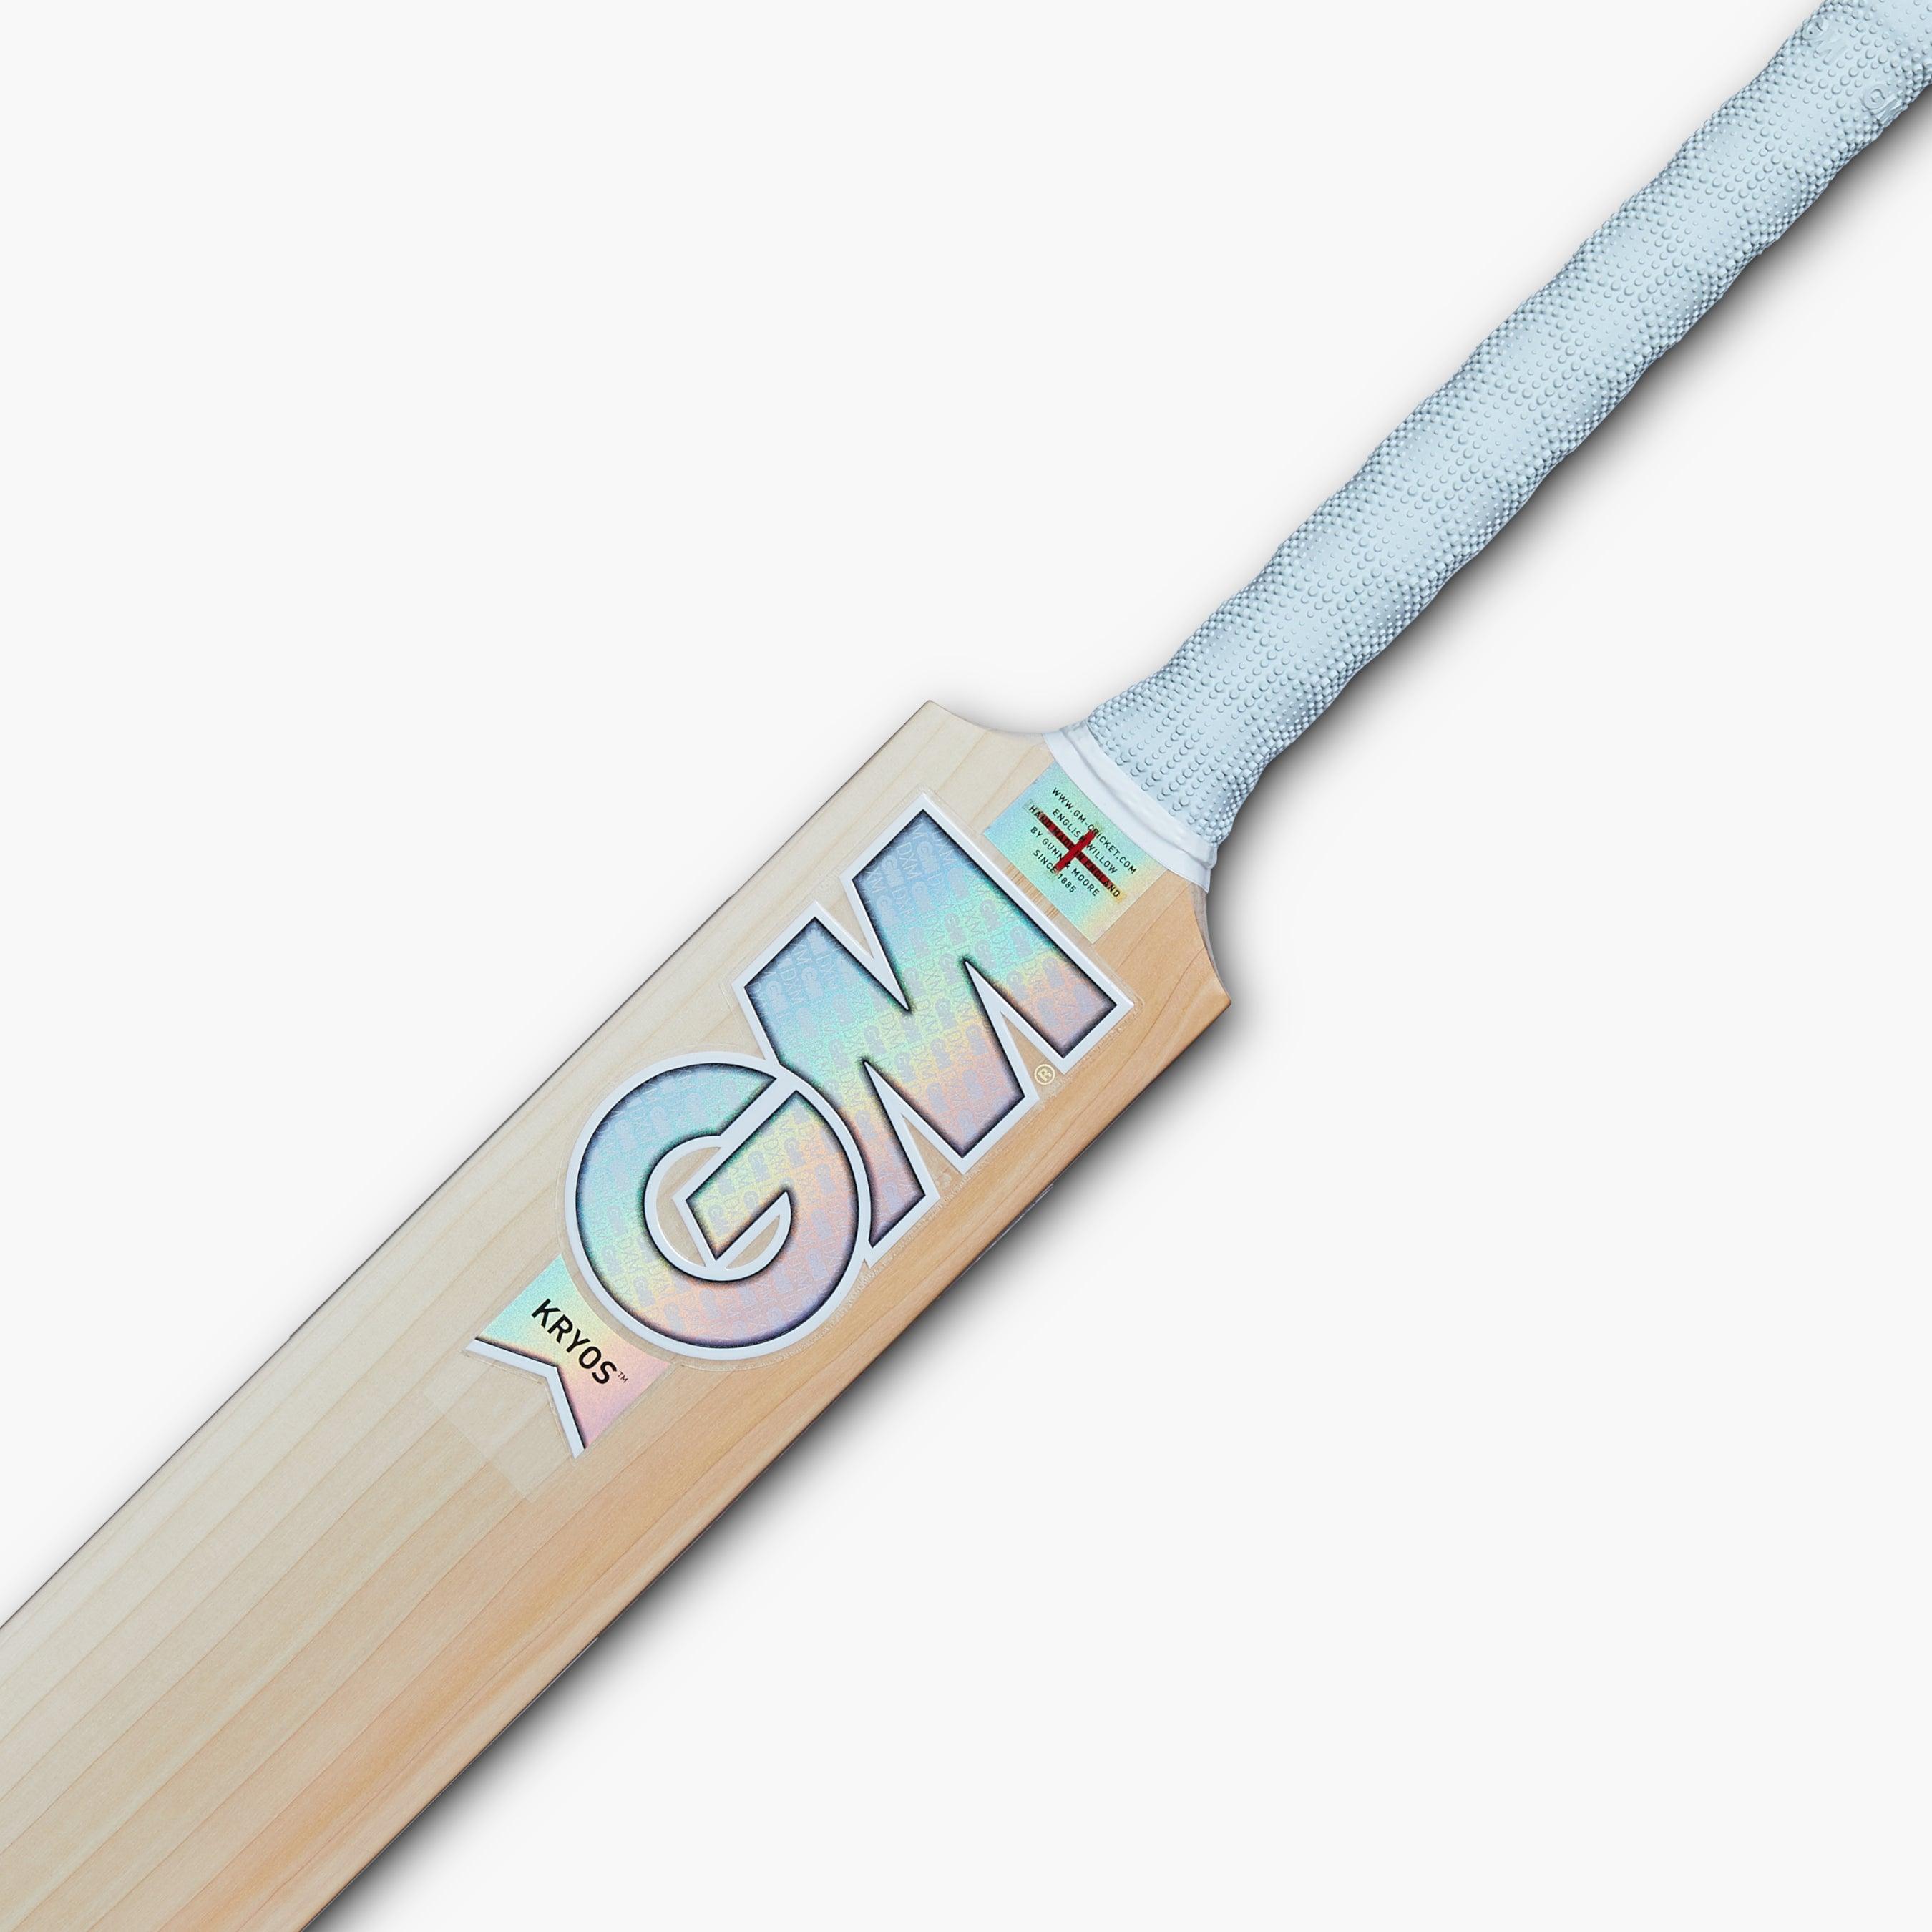 GM Kryos 808 DXM TTNOW L540 English Willow Cricket Bat - SH - AT Sports